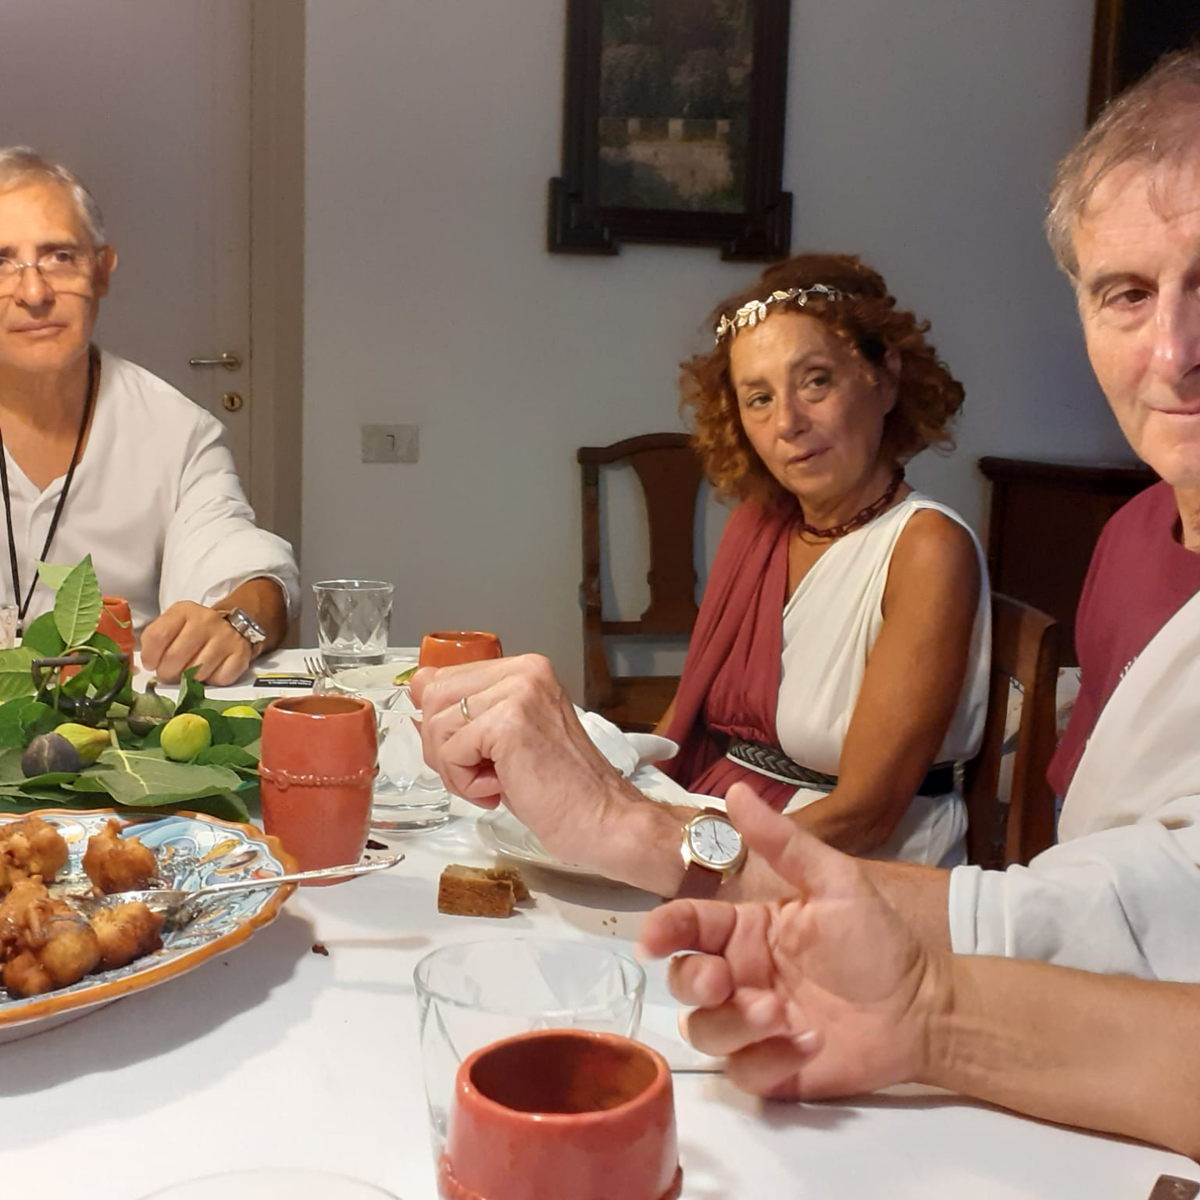 Enjoy an authentic ancient roman dinner!